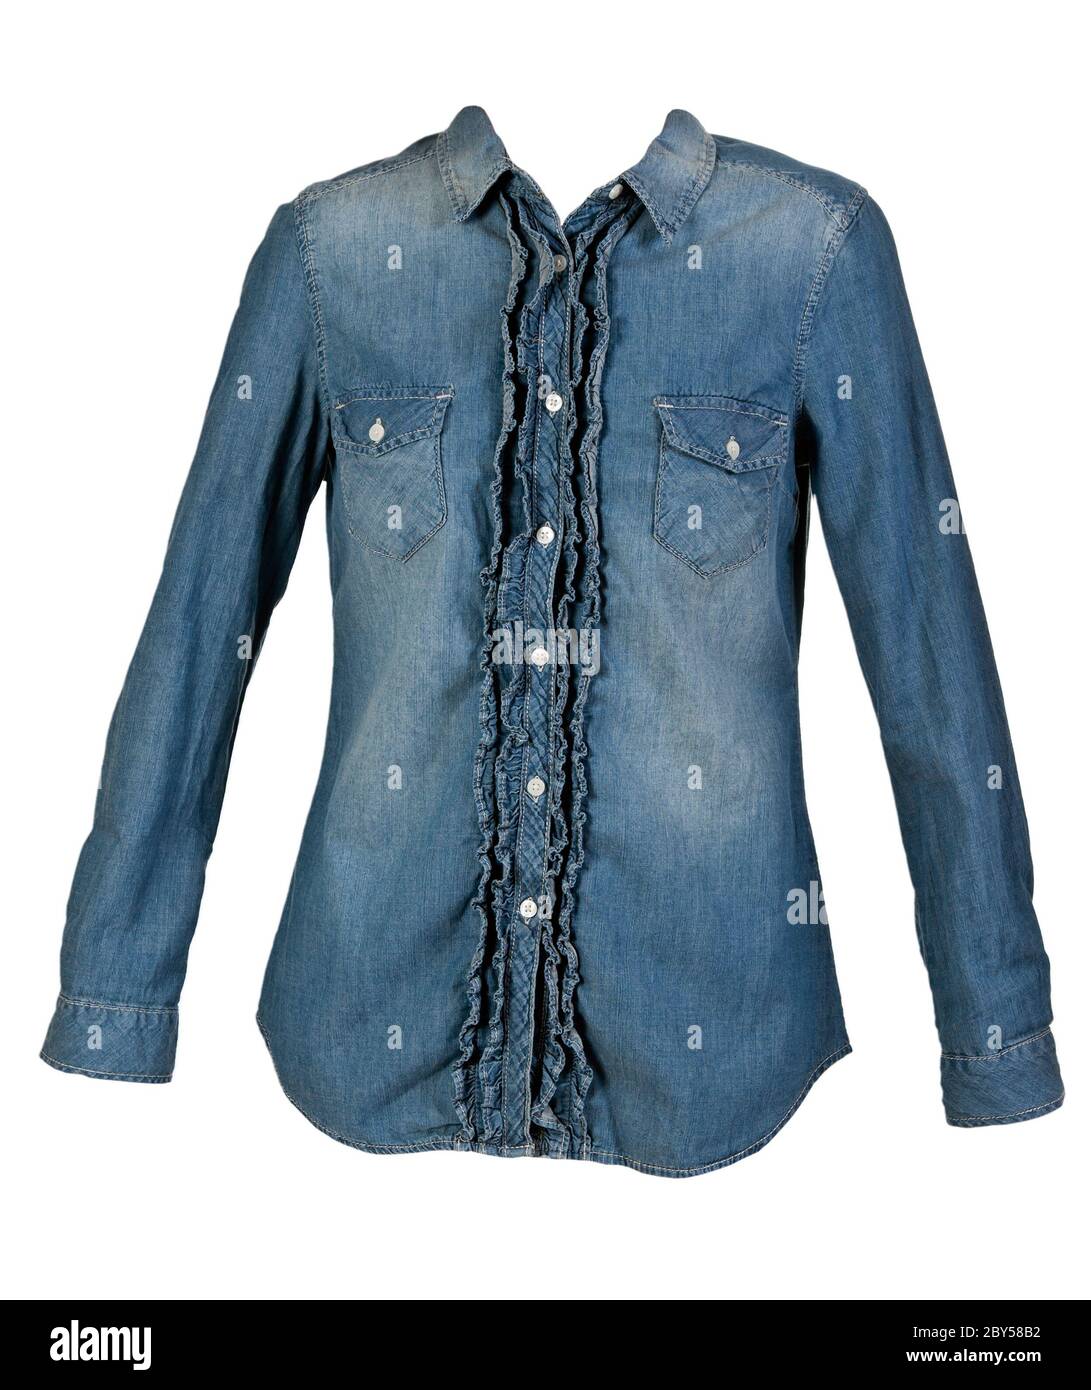 blue jean shirt Stock Photo - Alamy